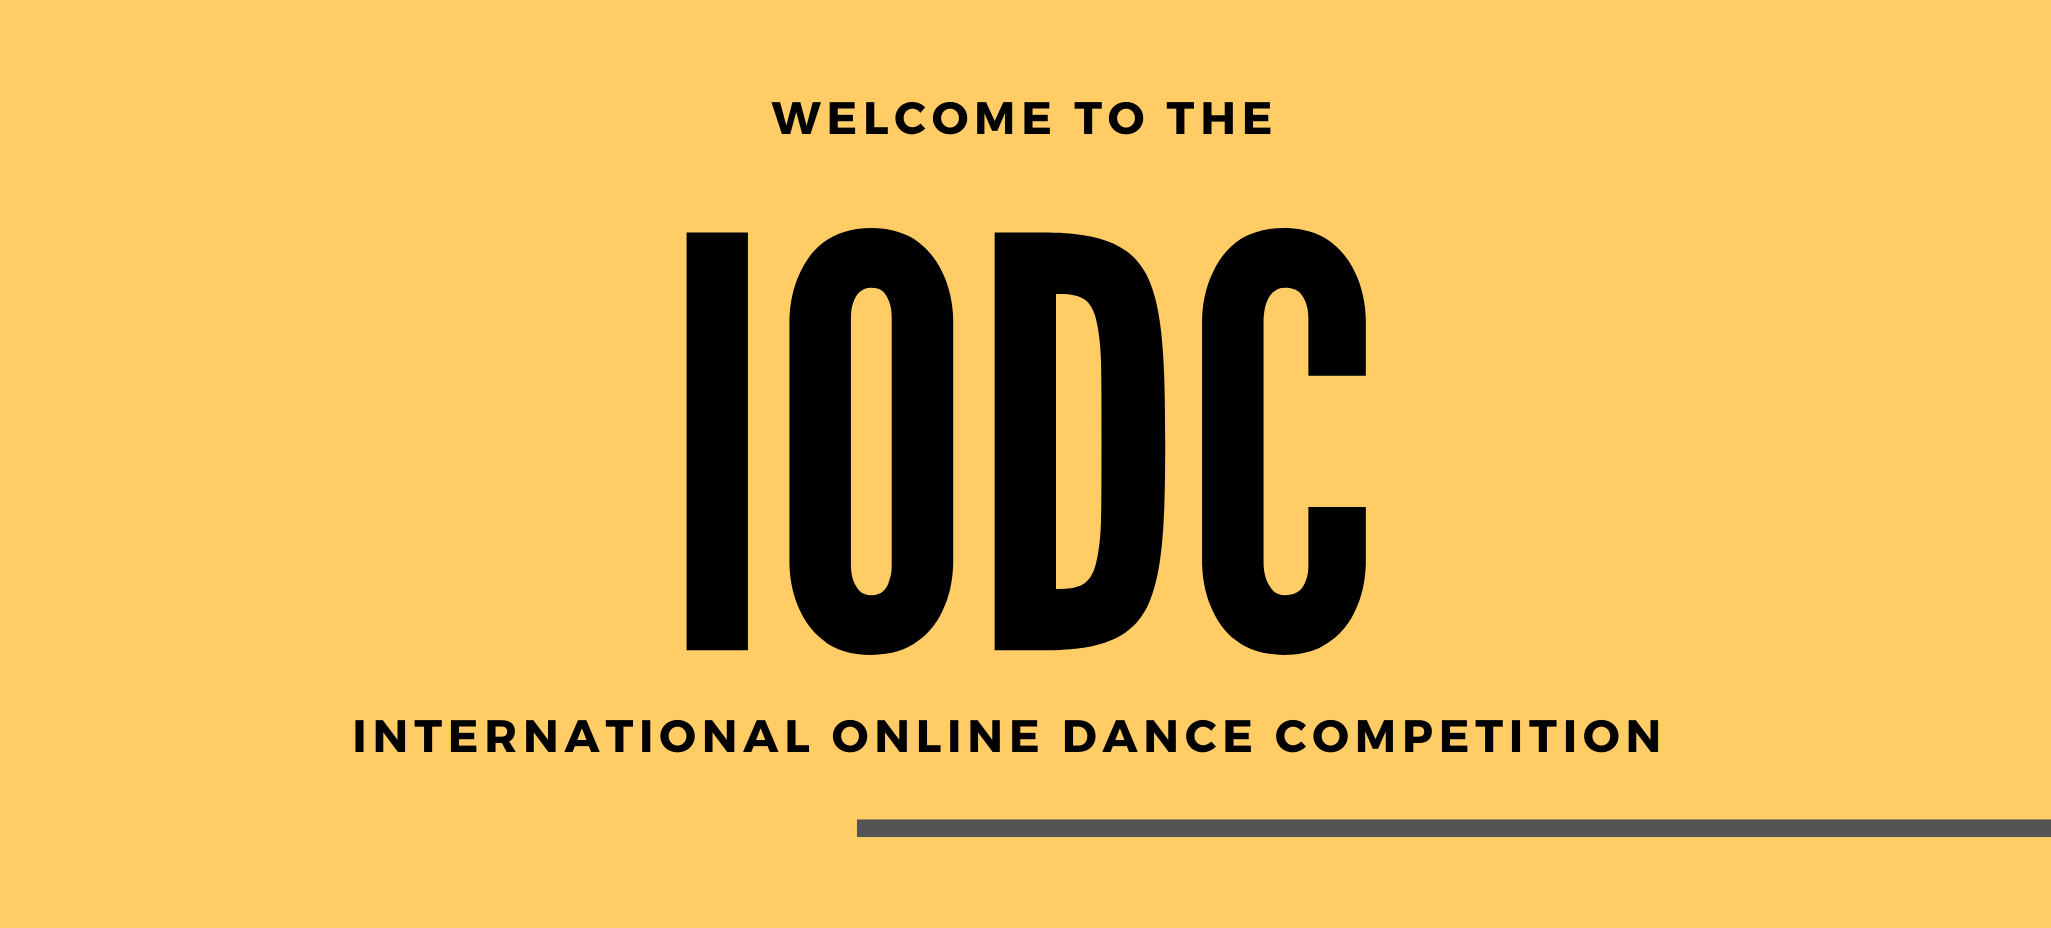 International Online Dance Competition